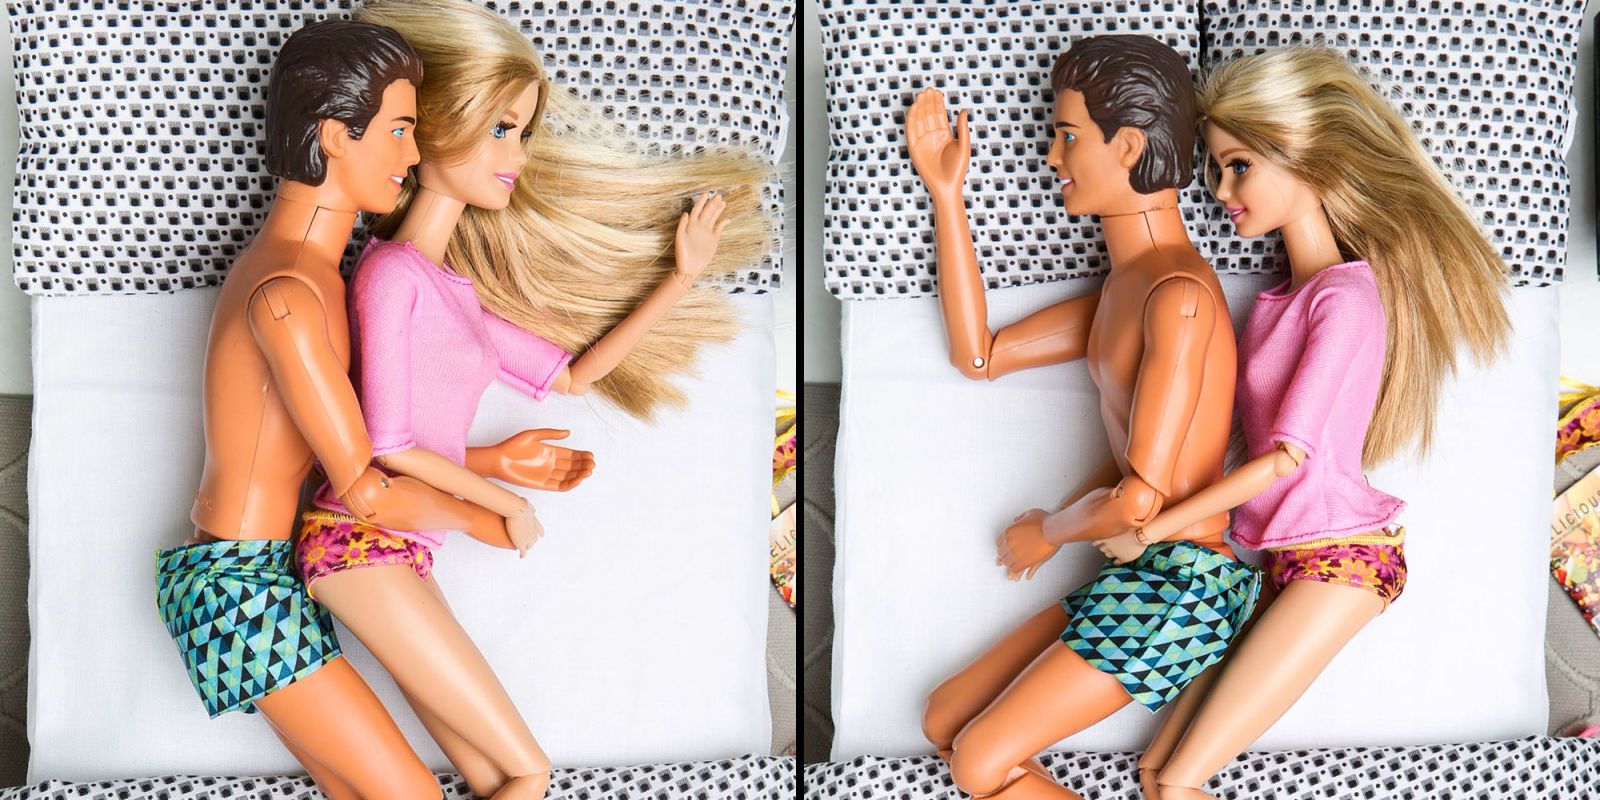 Nude doll lies on partner